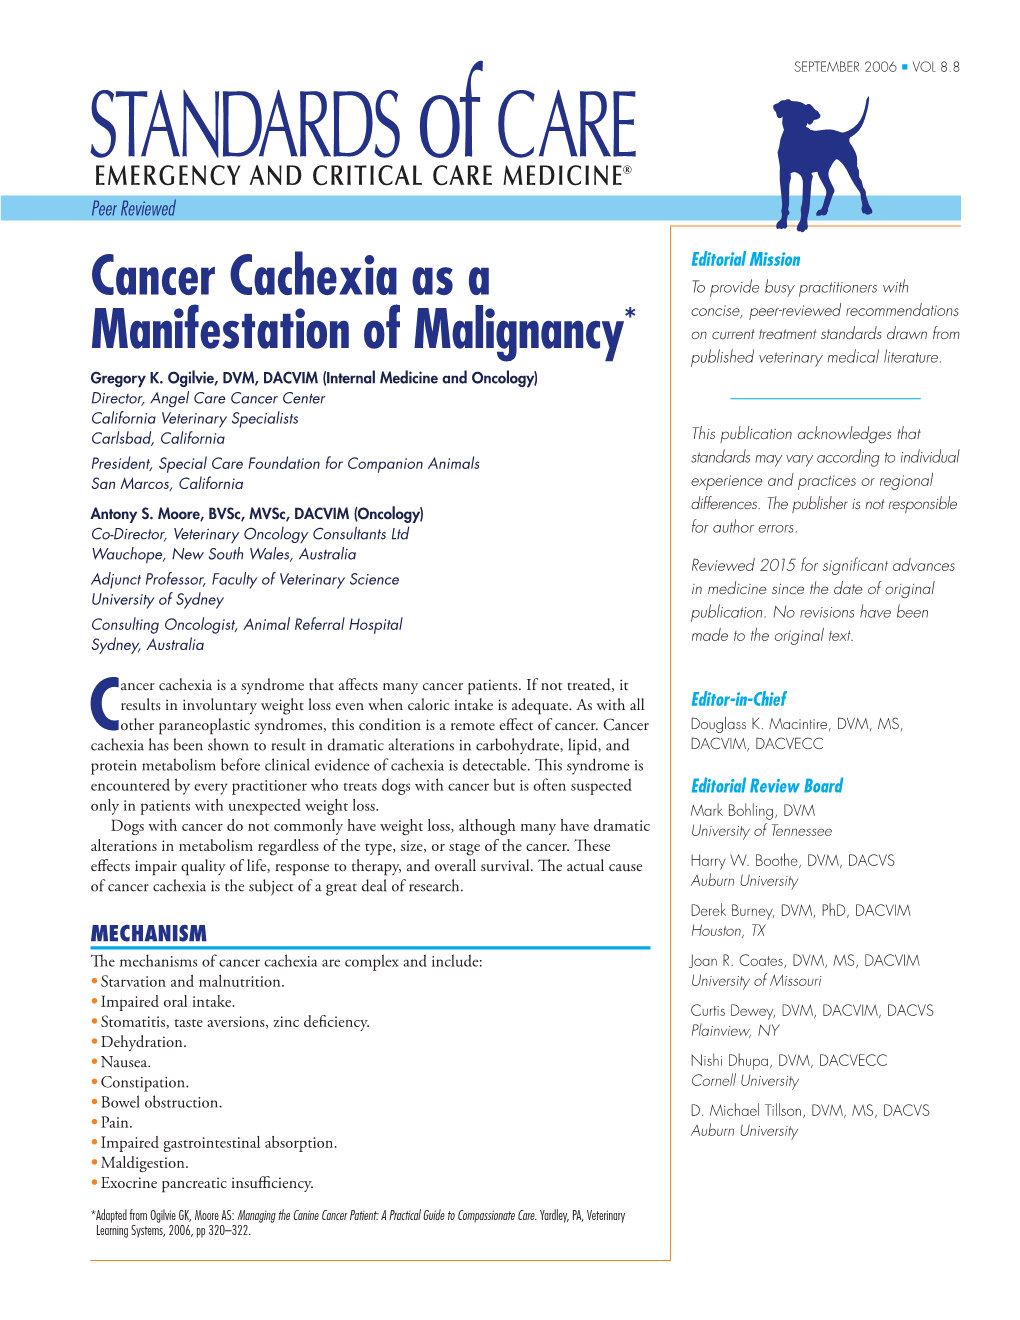 Cancer Cachexia As a Manifestation of Malignancy*